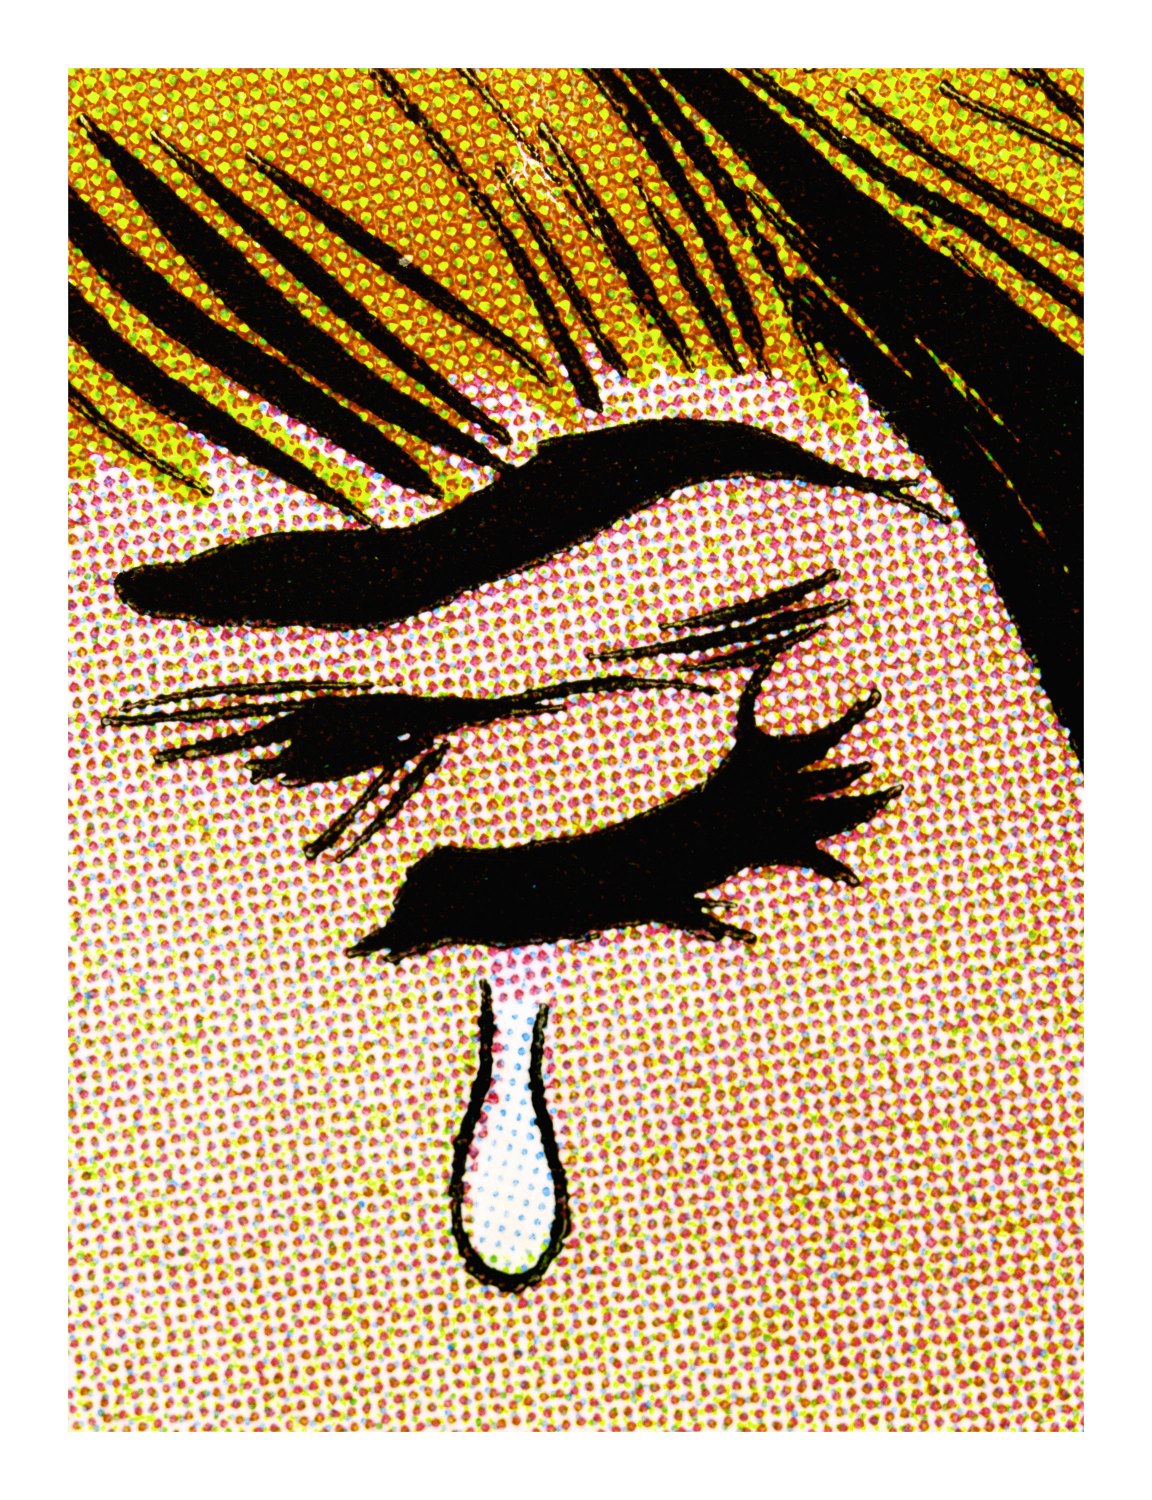 Anne Collier Woman Crying (Comic) #24, 2020 C-print, 65.4 x 49.7 (cm)